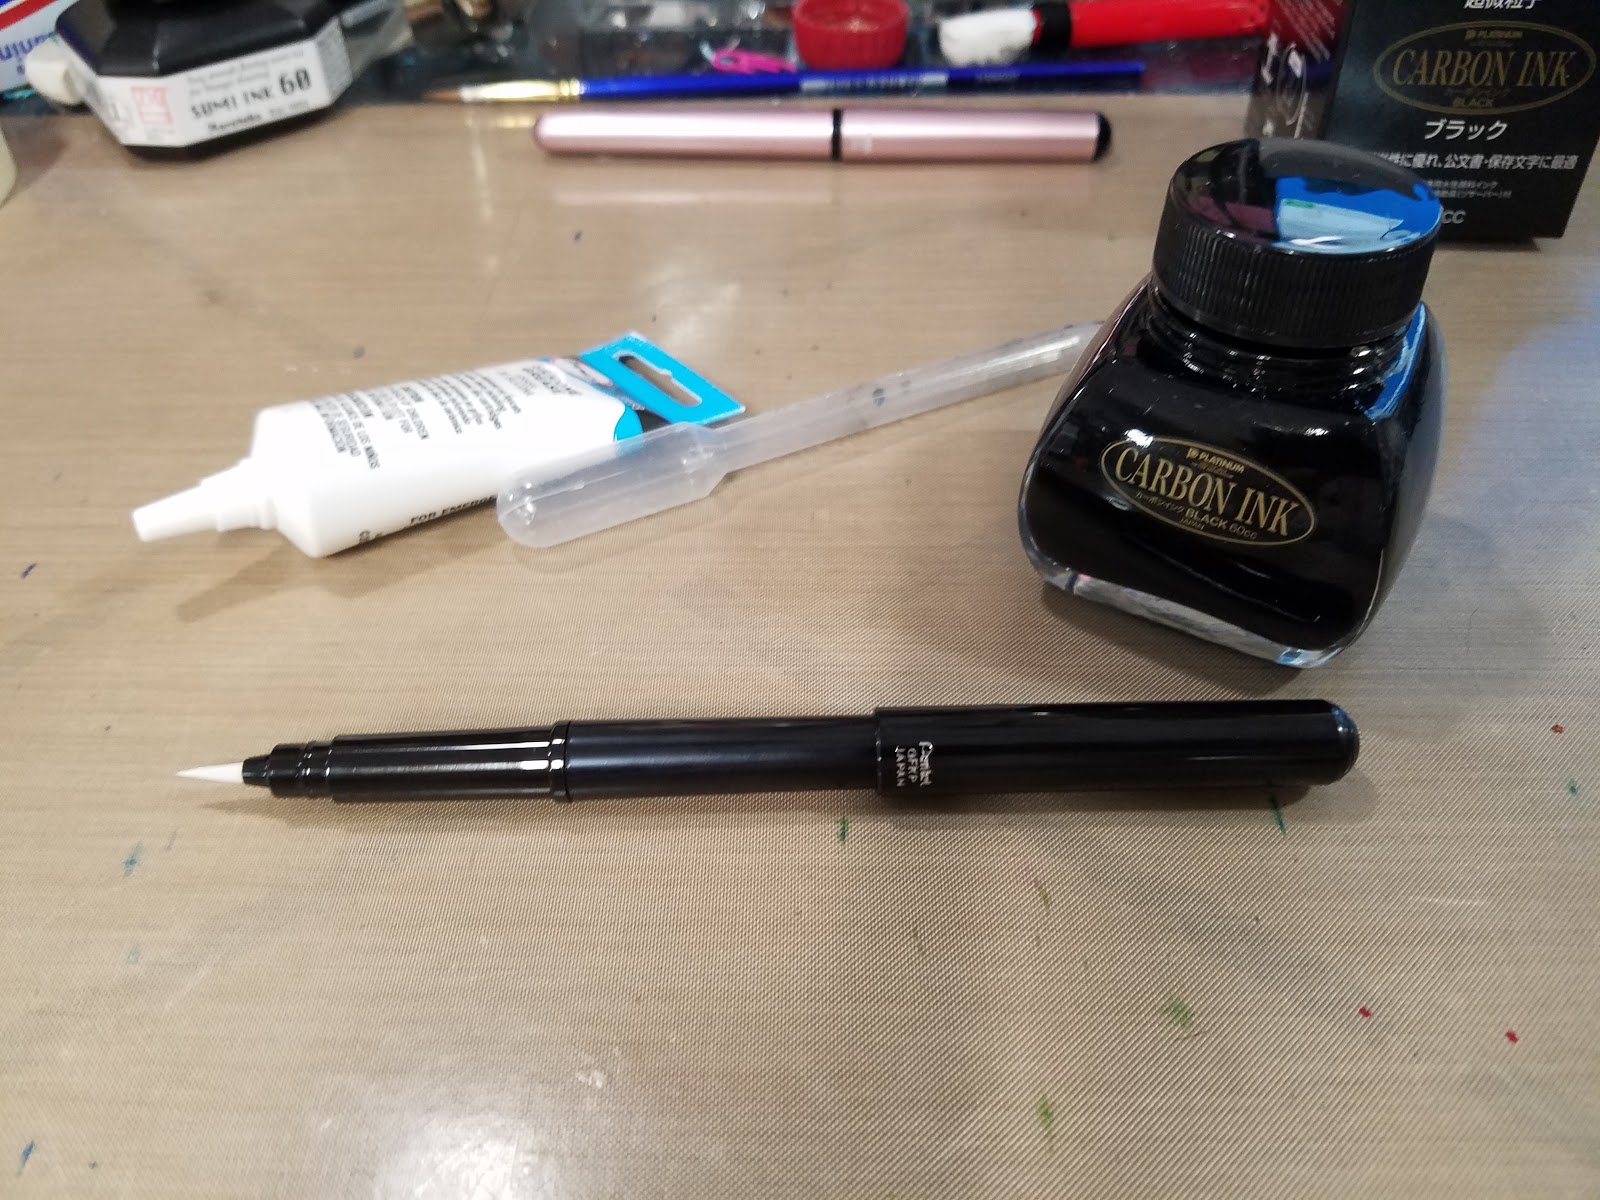 Pocket Brush Pen with 2 Black Refills – Pentel of America, Ltd.